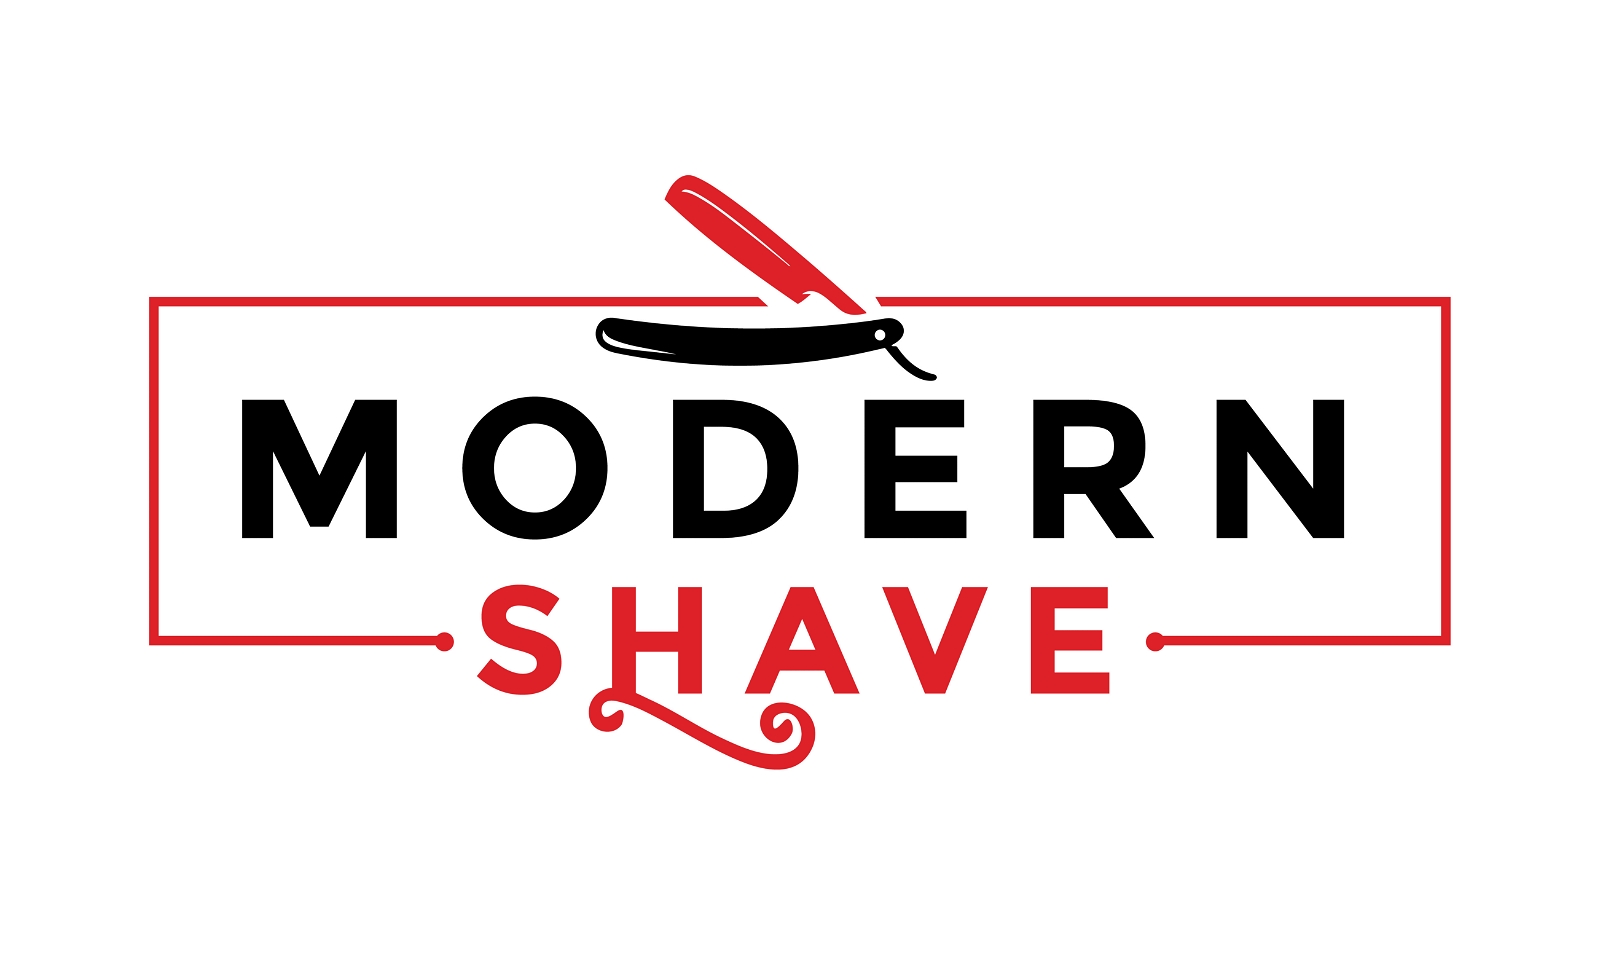 ModernShave.com - Creative brandable domain for sale